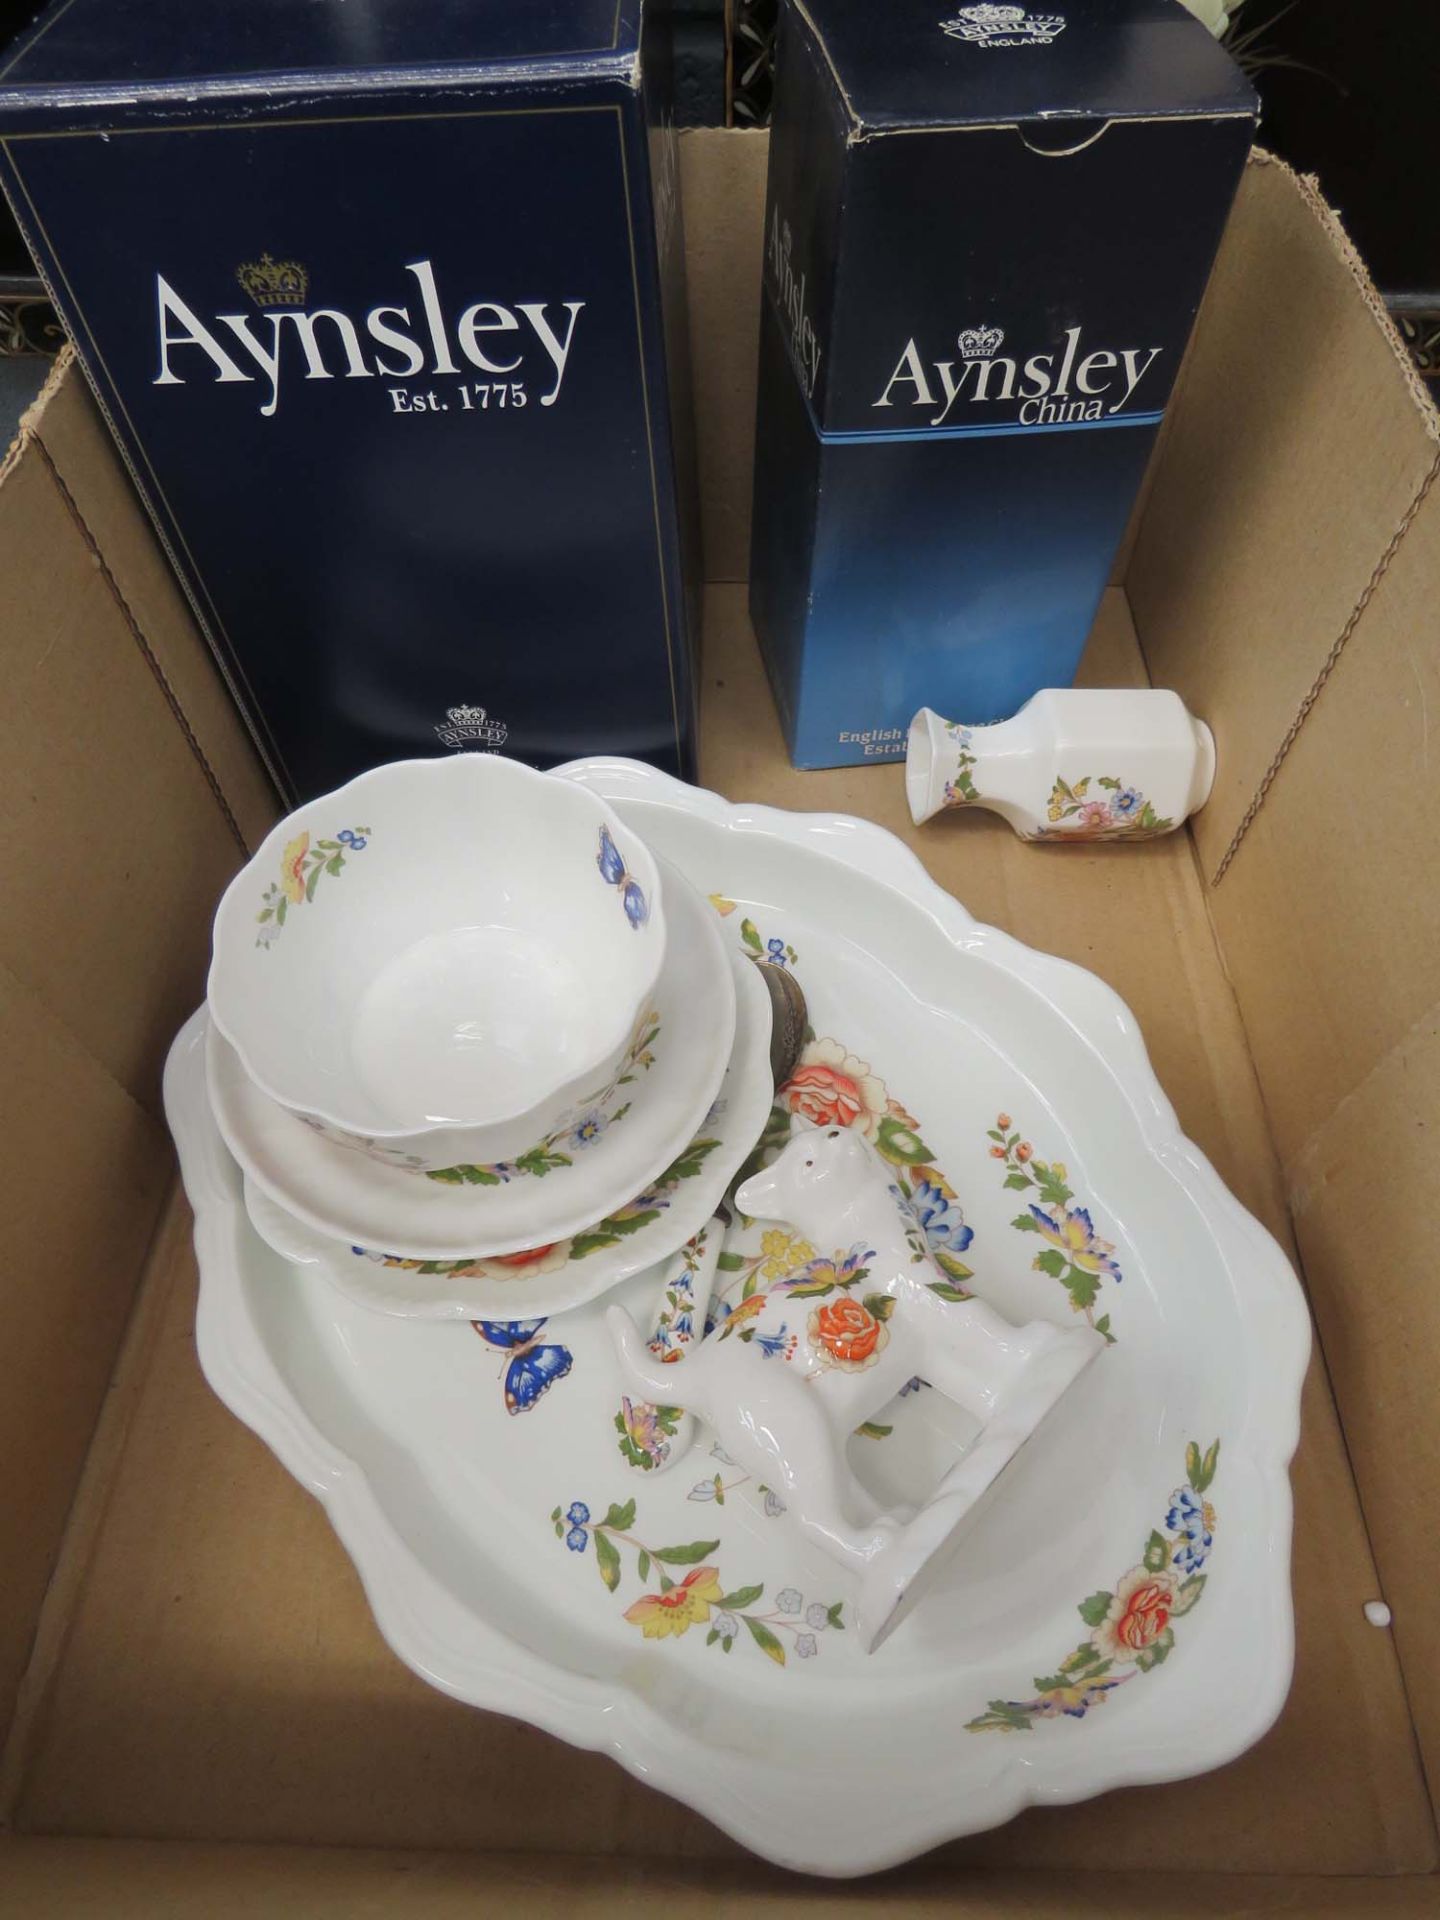 Box containing Aynsley china